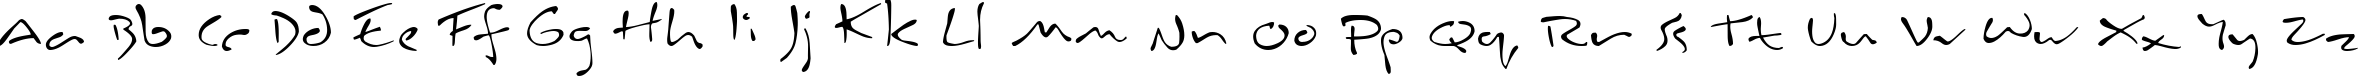 Пример написания английского алфавита шрифтом Inkburrow